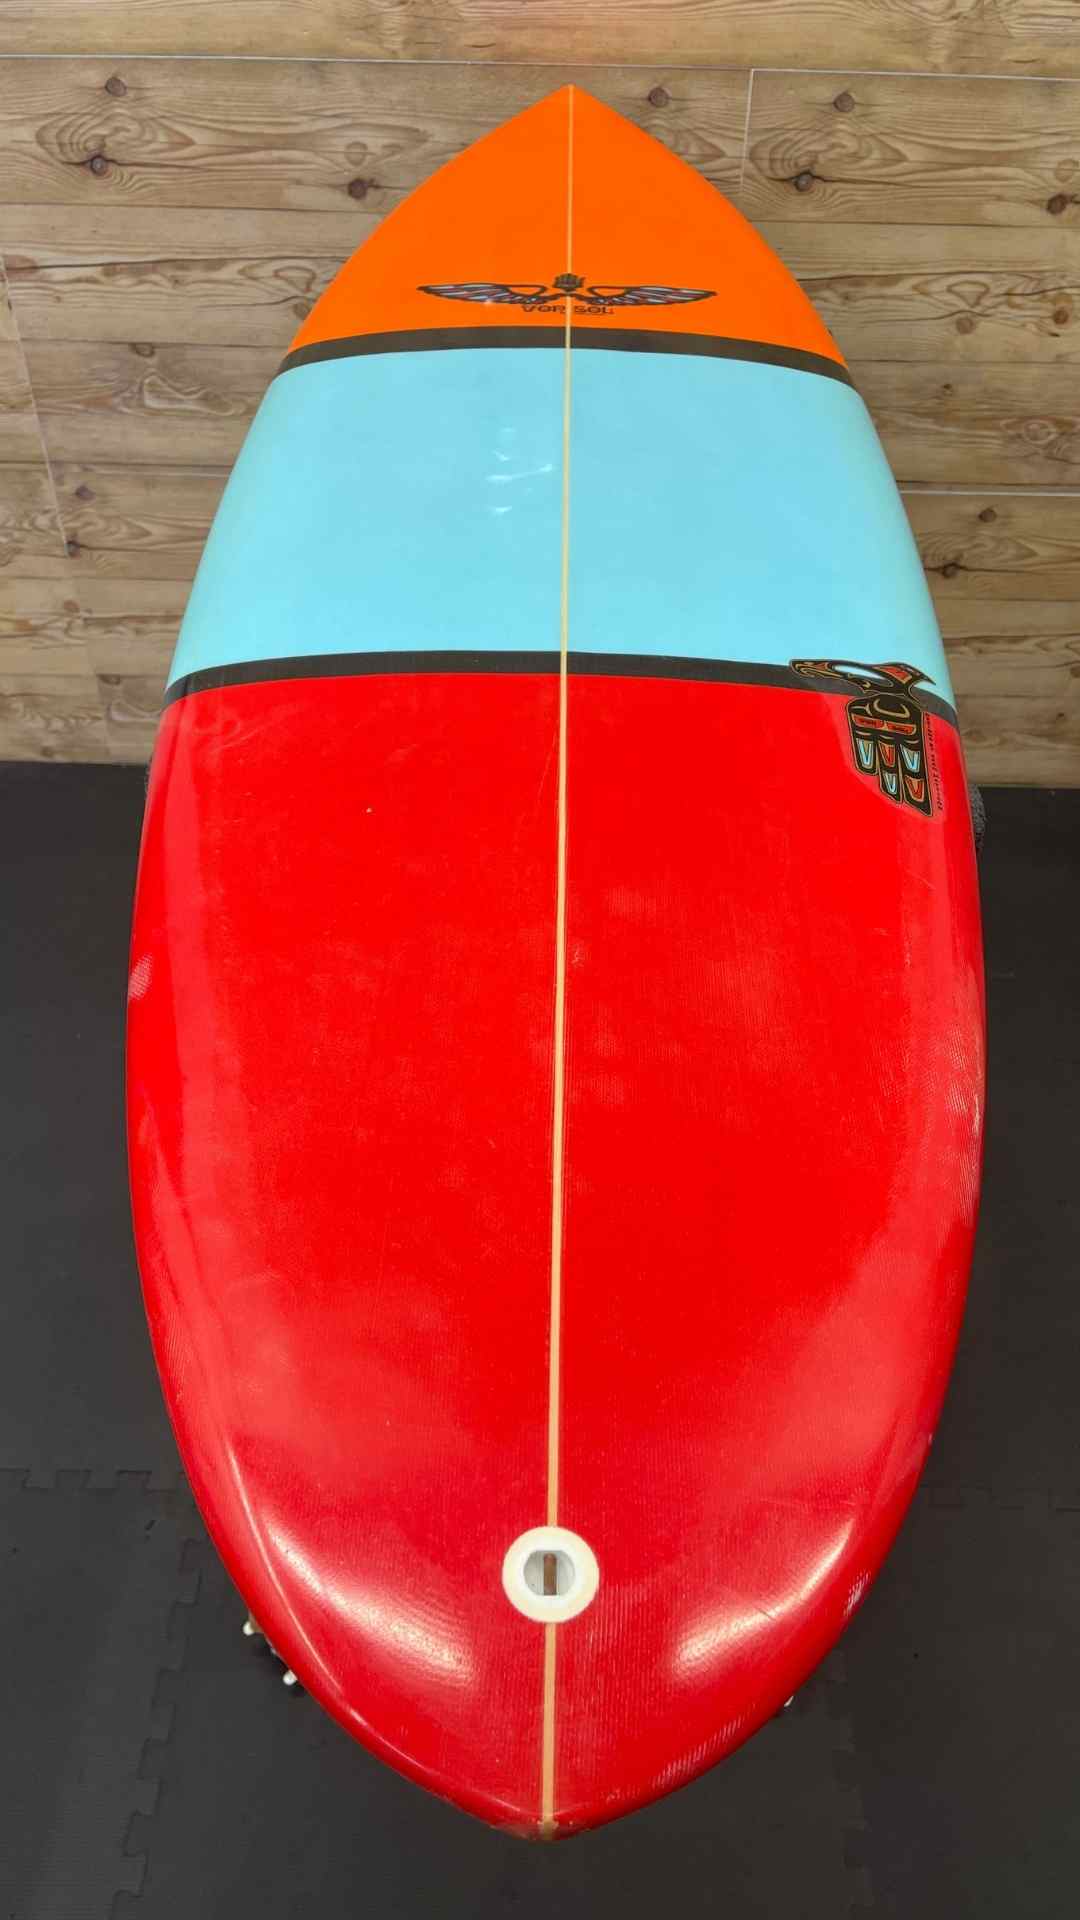 Von Sol Surfboards 4+1 Shortboard - The Board Source